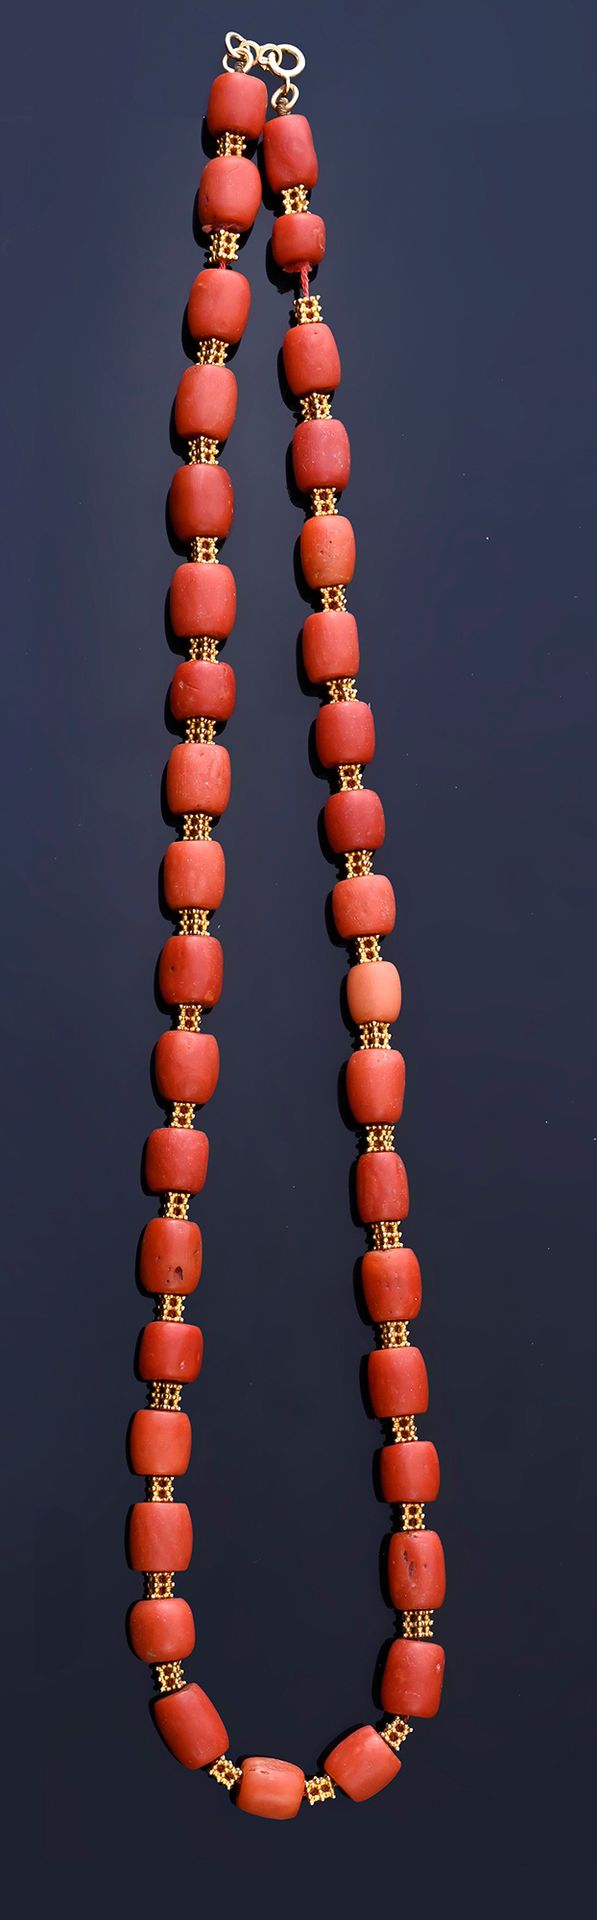 Null 酒桶形珊瑚珍珠项链，交替饰有 18K 金（750 度）颗粒状图案，弹簧环扣。
毛重：70.40 克。
长度：55 厘米